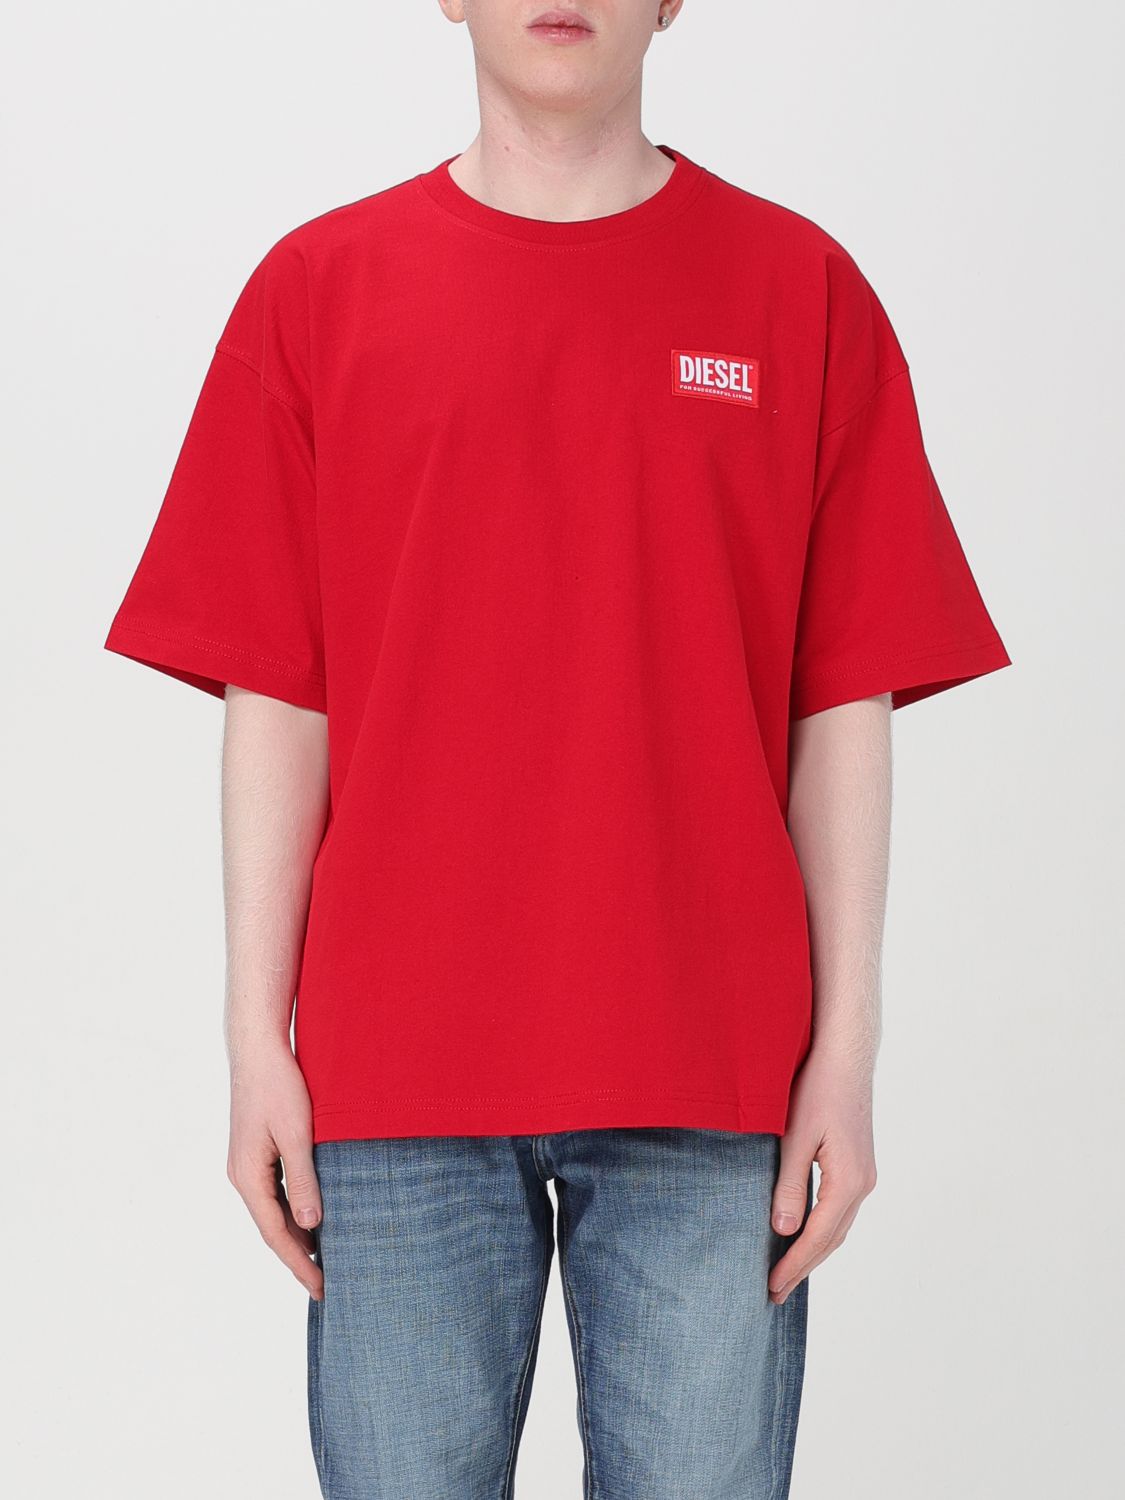 Diesel T-Shirt DIESEL Men colour Red